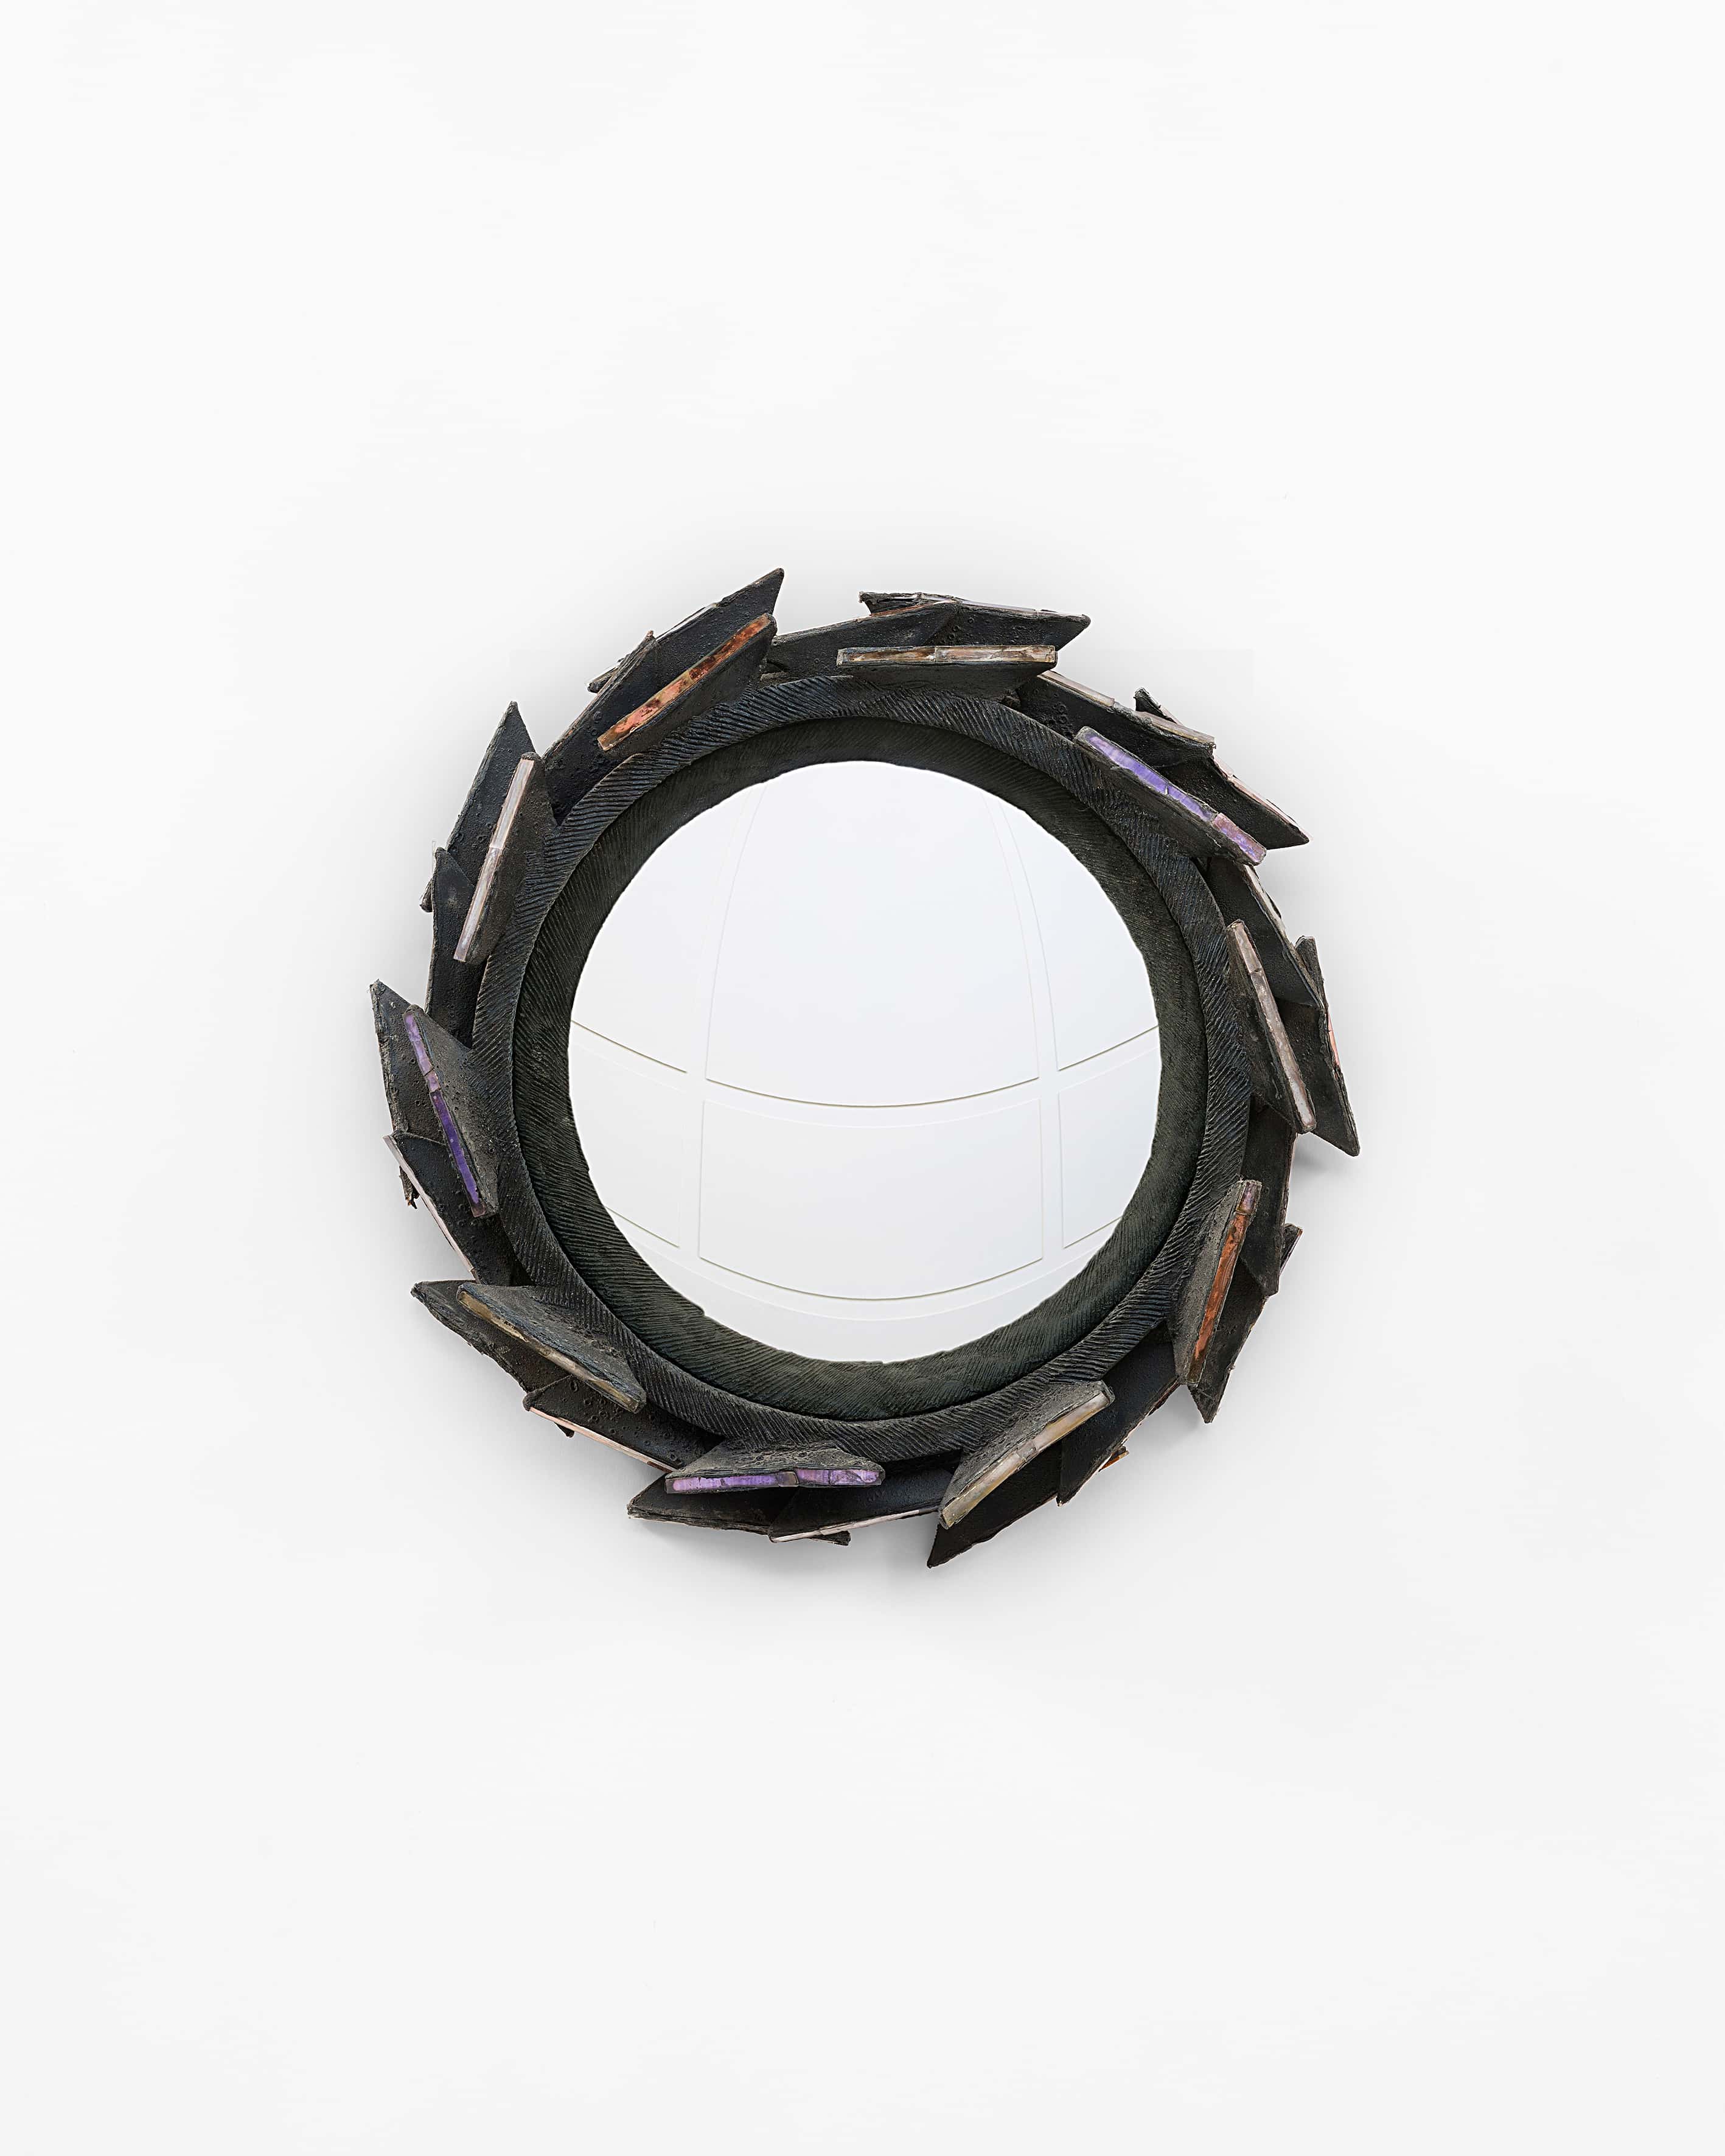 Line Vautrin, Rare “Pacifique” mirror, vue 01